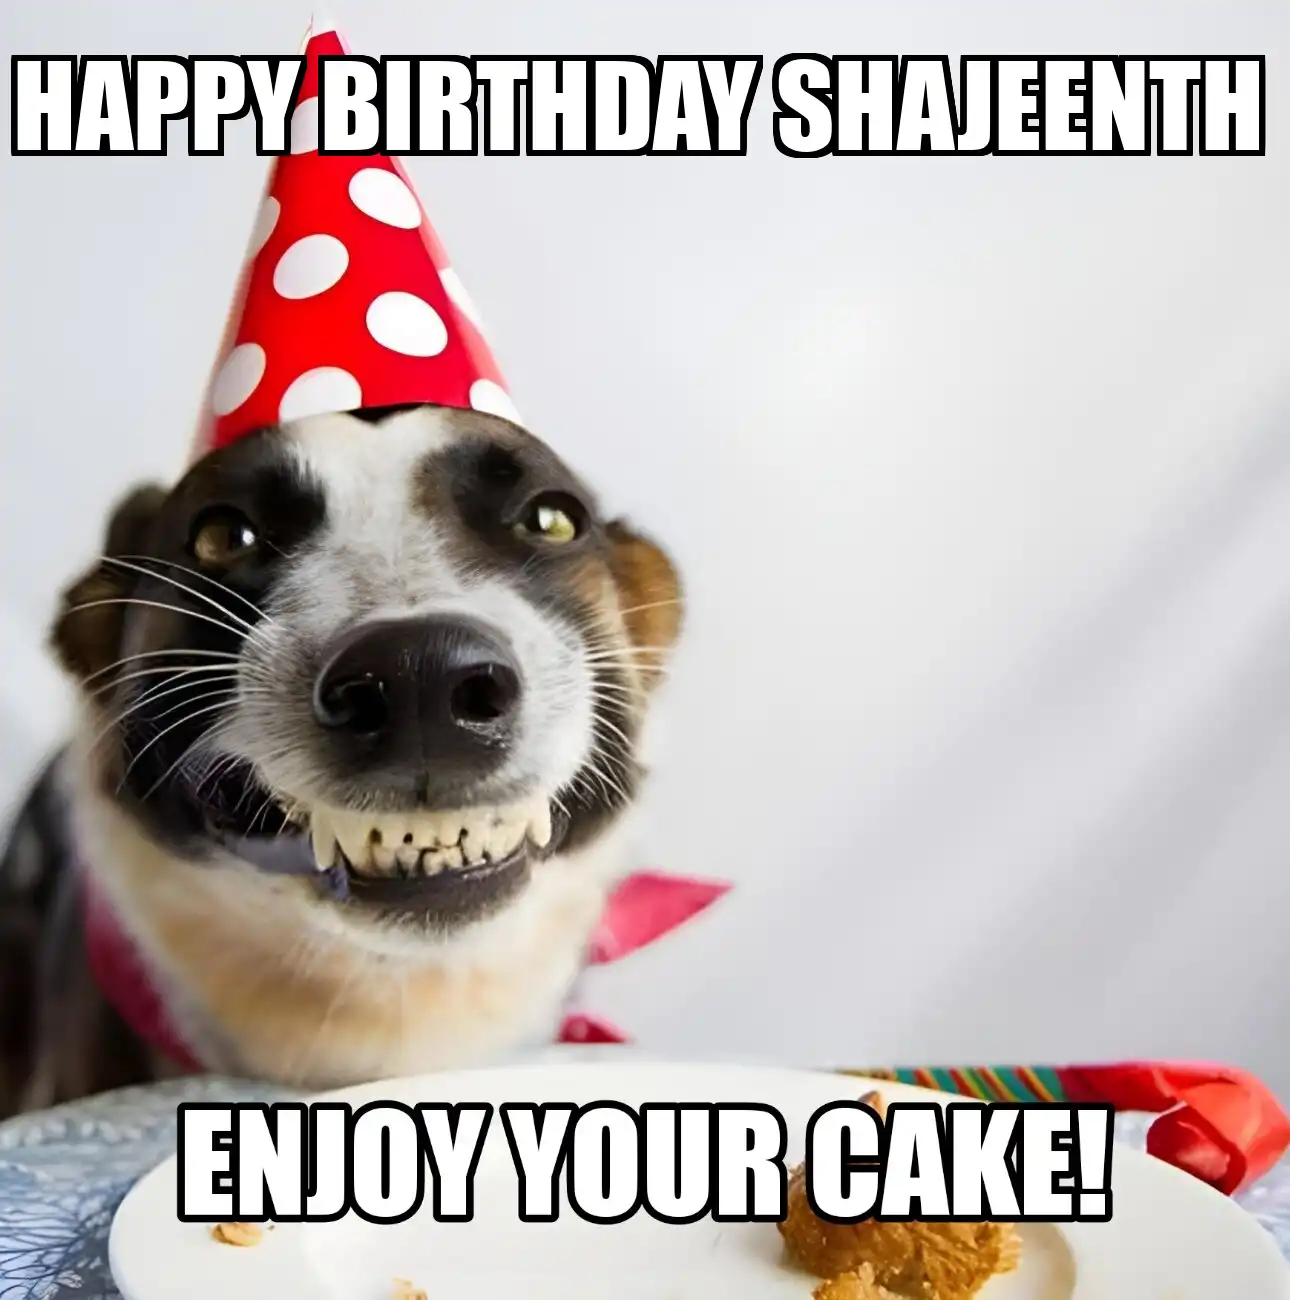 Happy Birthday Shajeenth Enjoy Your Cake Dog Meme